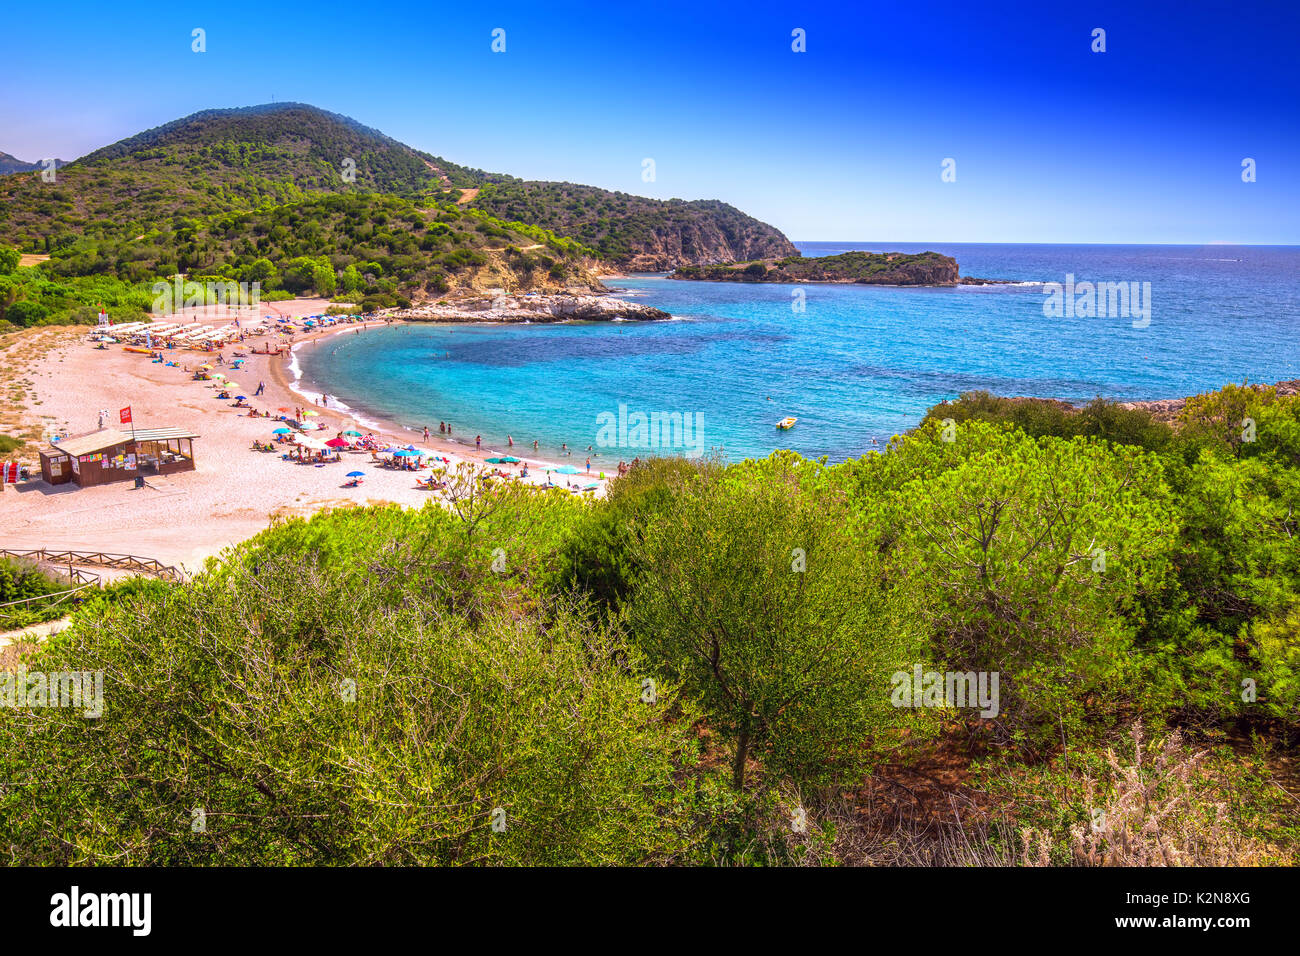 Su Portu beach, Chia resort, Sardinia, Italy, Europe. Sardinia is the second largest island in the Mediterranean Sea Stock Photo